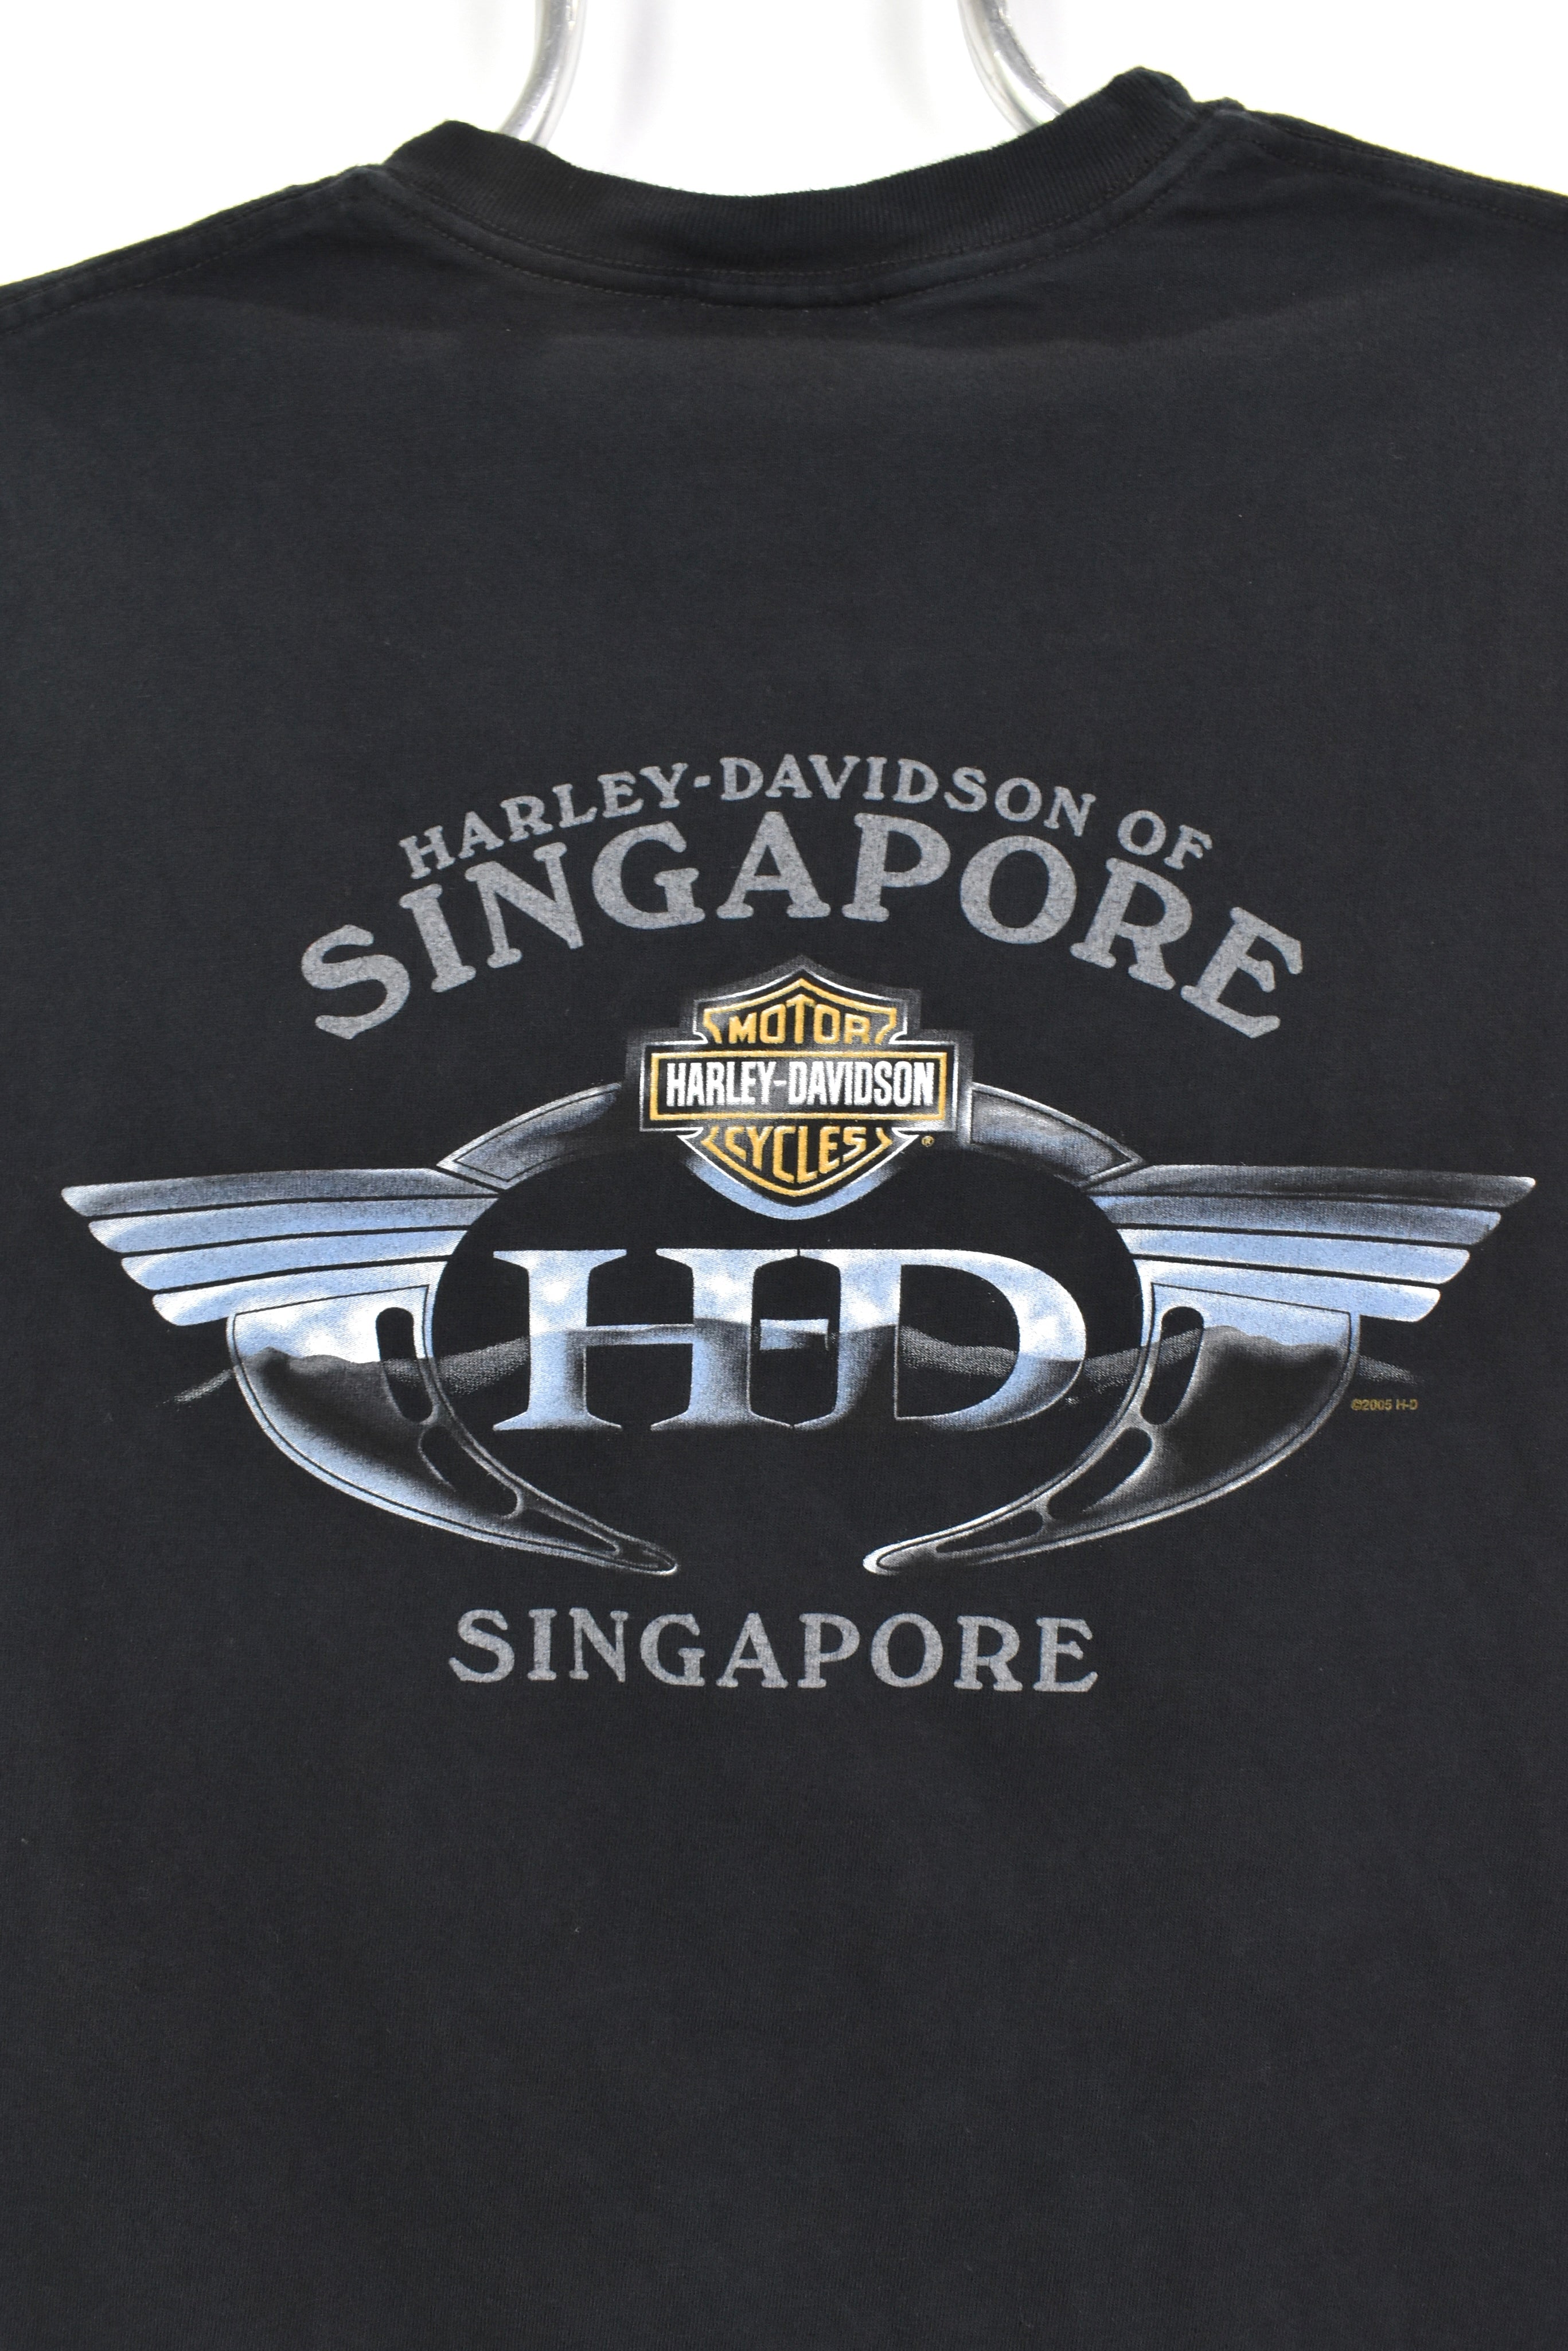 Vintage Harley Davidson shirt, motorcycle biker graphic tee - XL, black HARLEY DAVIDSON